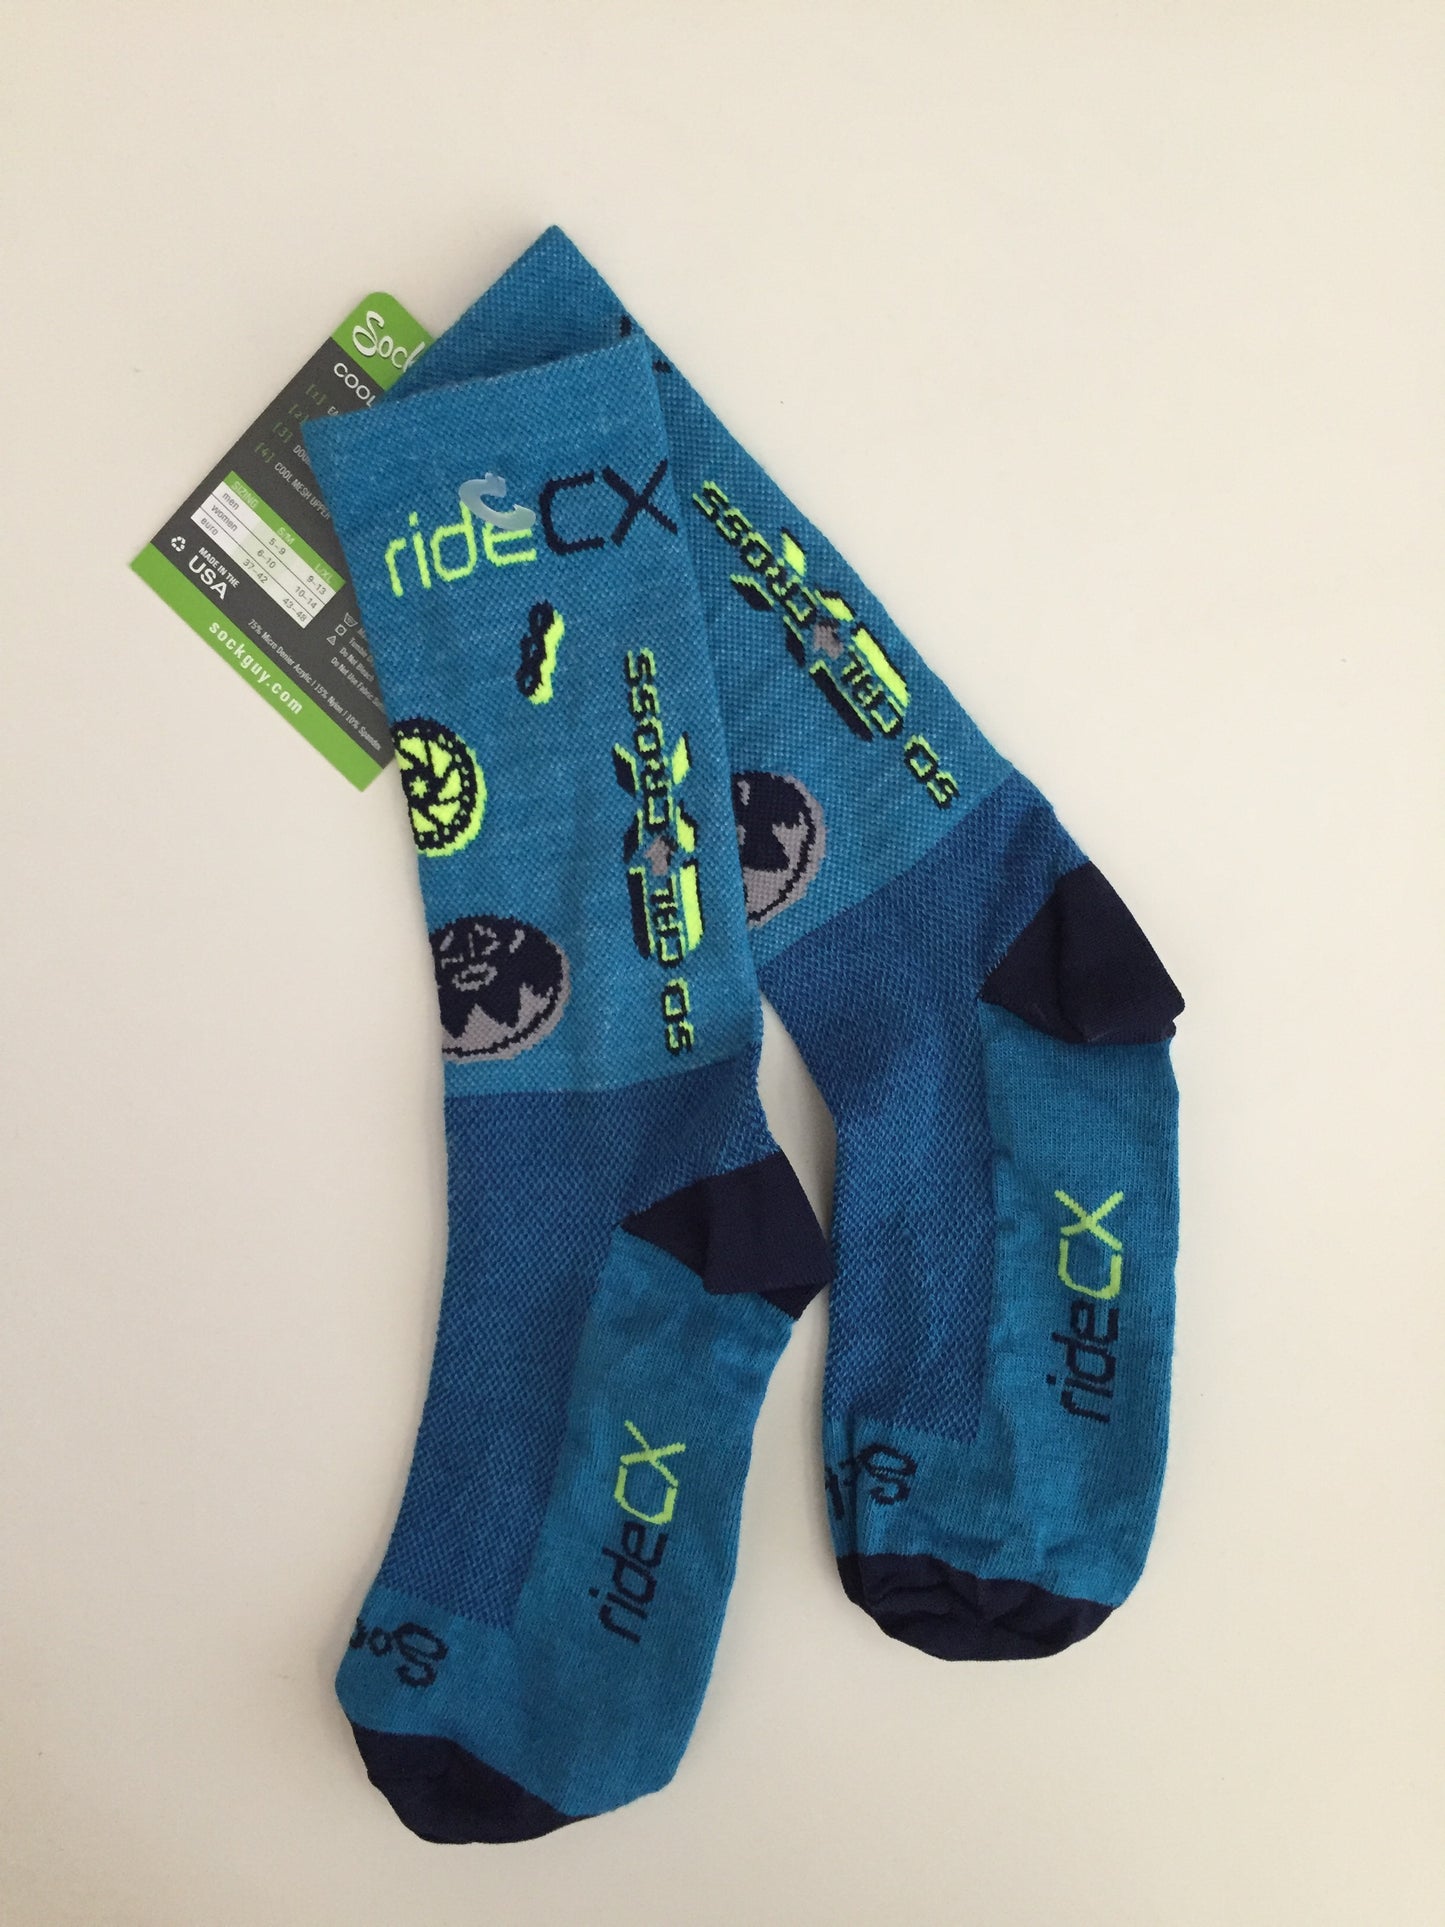 RideCX Cool Comfort Socks by Sock Guy - RideCX cyclocross store